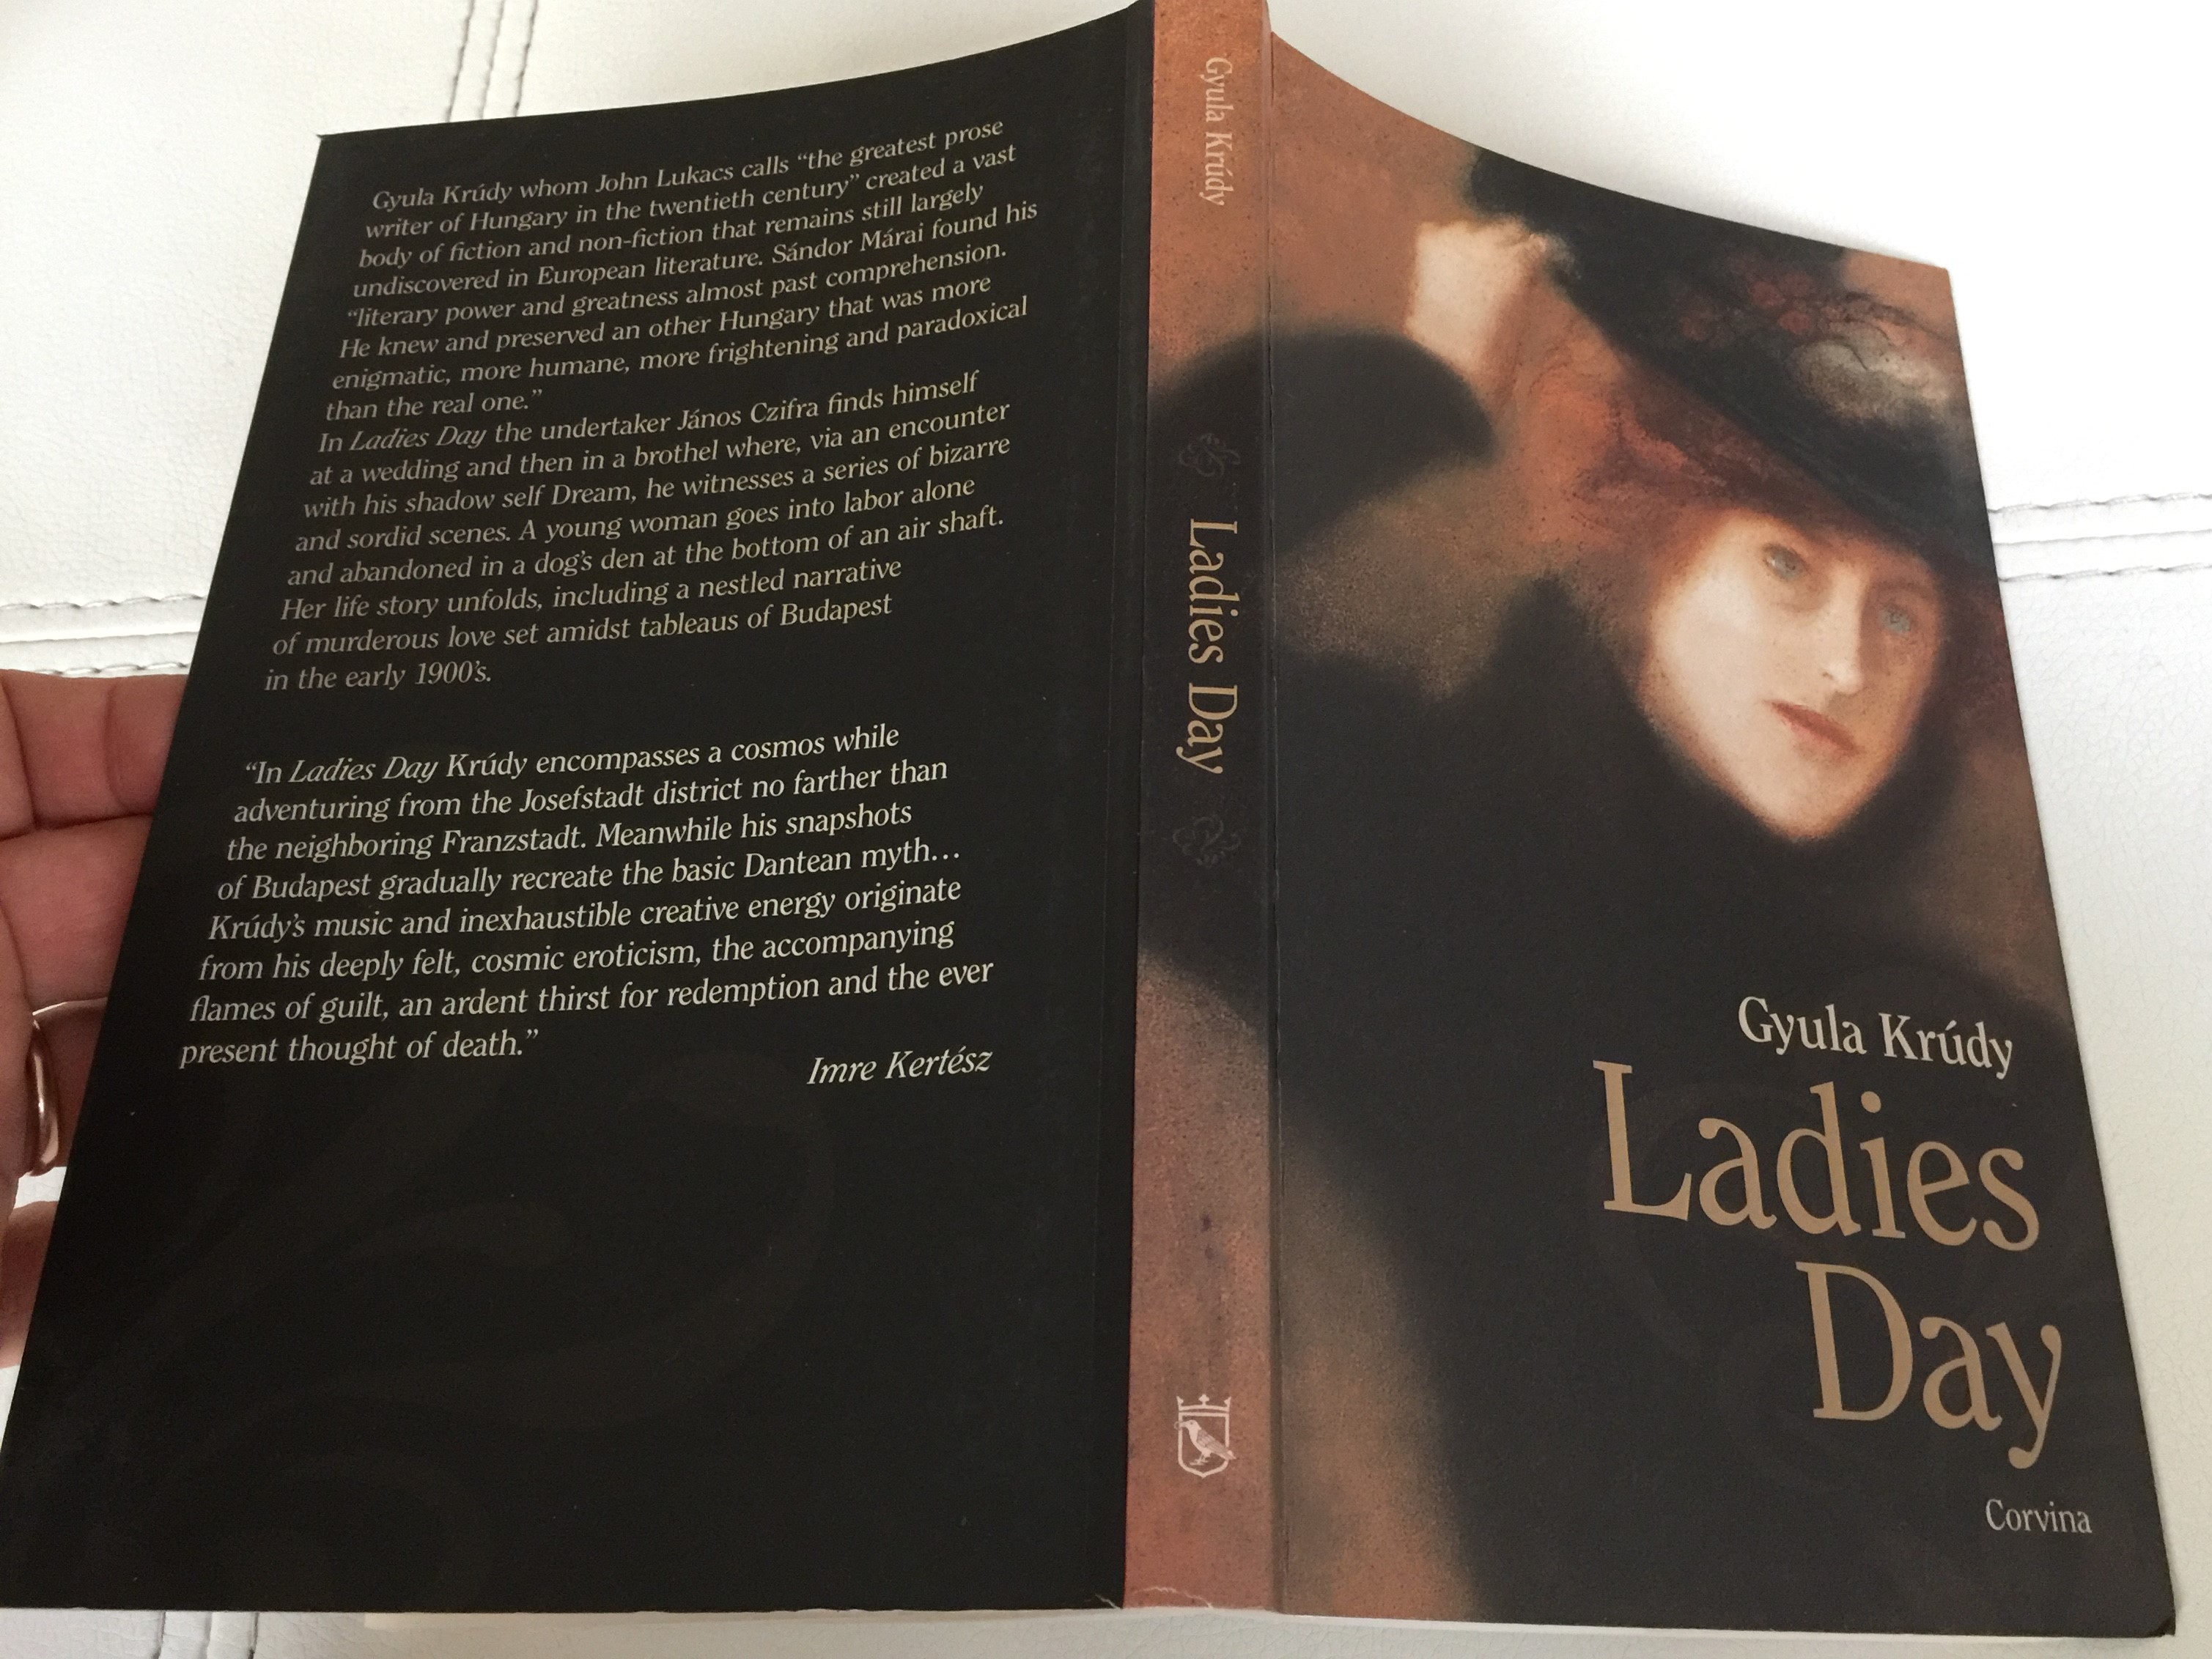 ladies-day-by-gyula-kr-dy-english-edition-of-asszonys-gok-d-ja-10.jpg